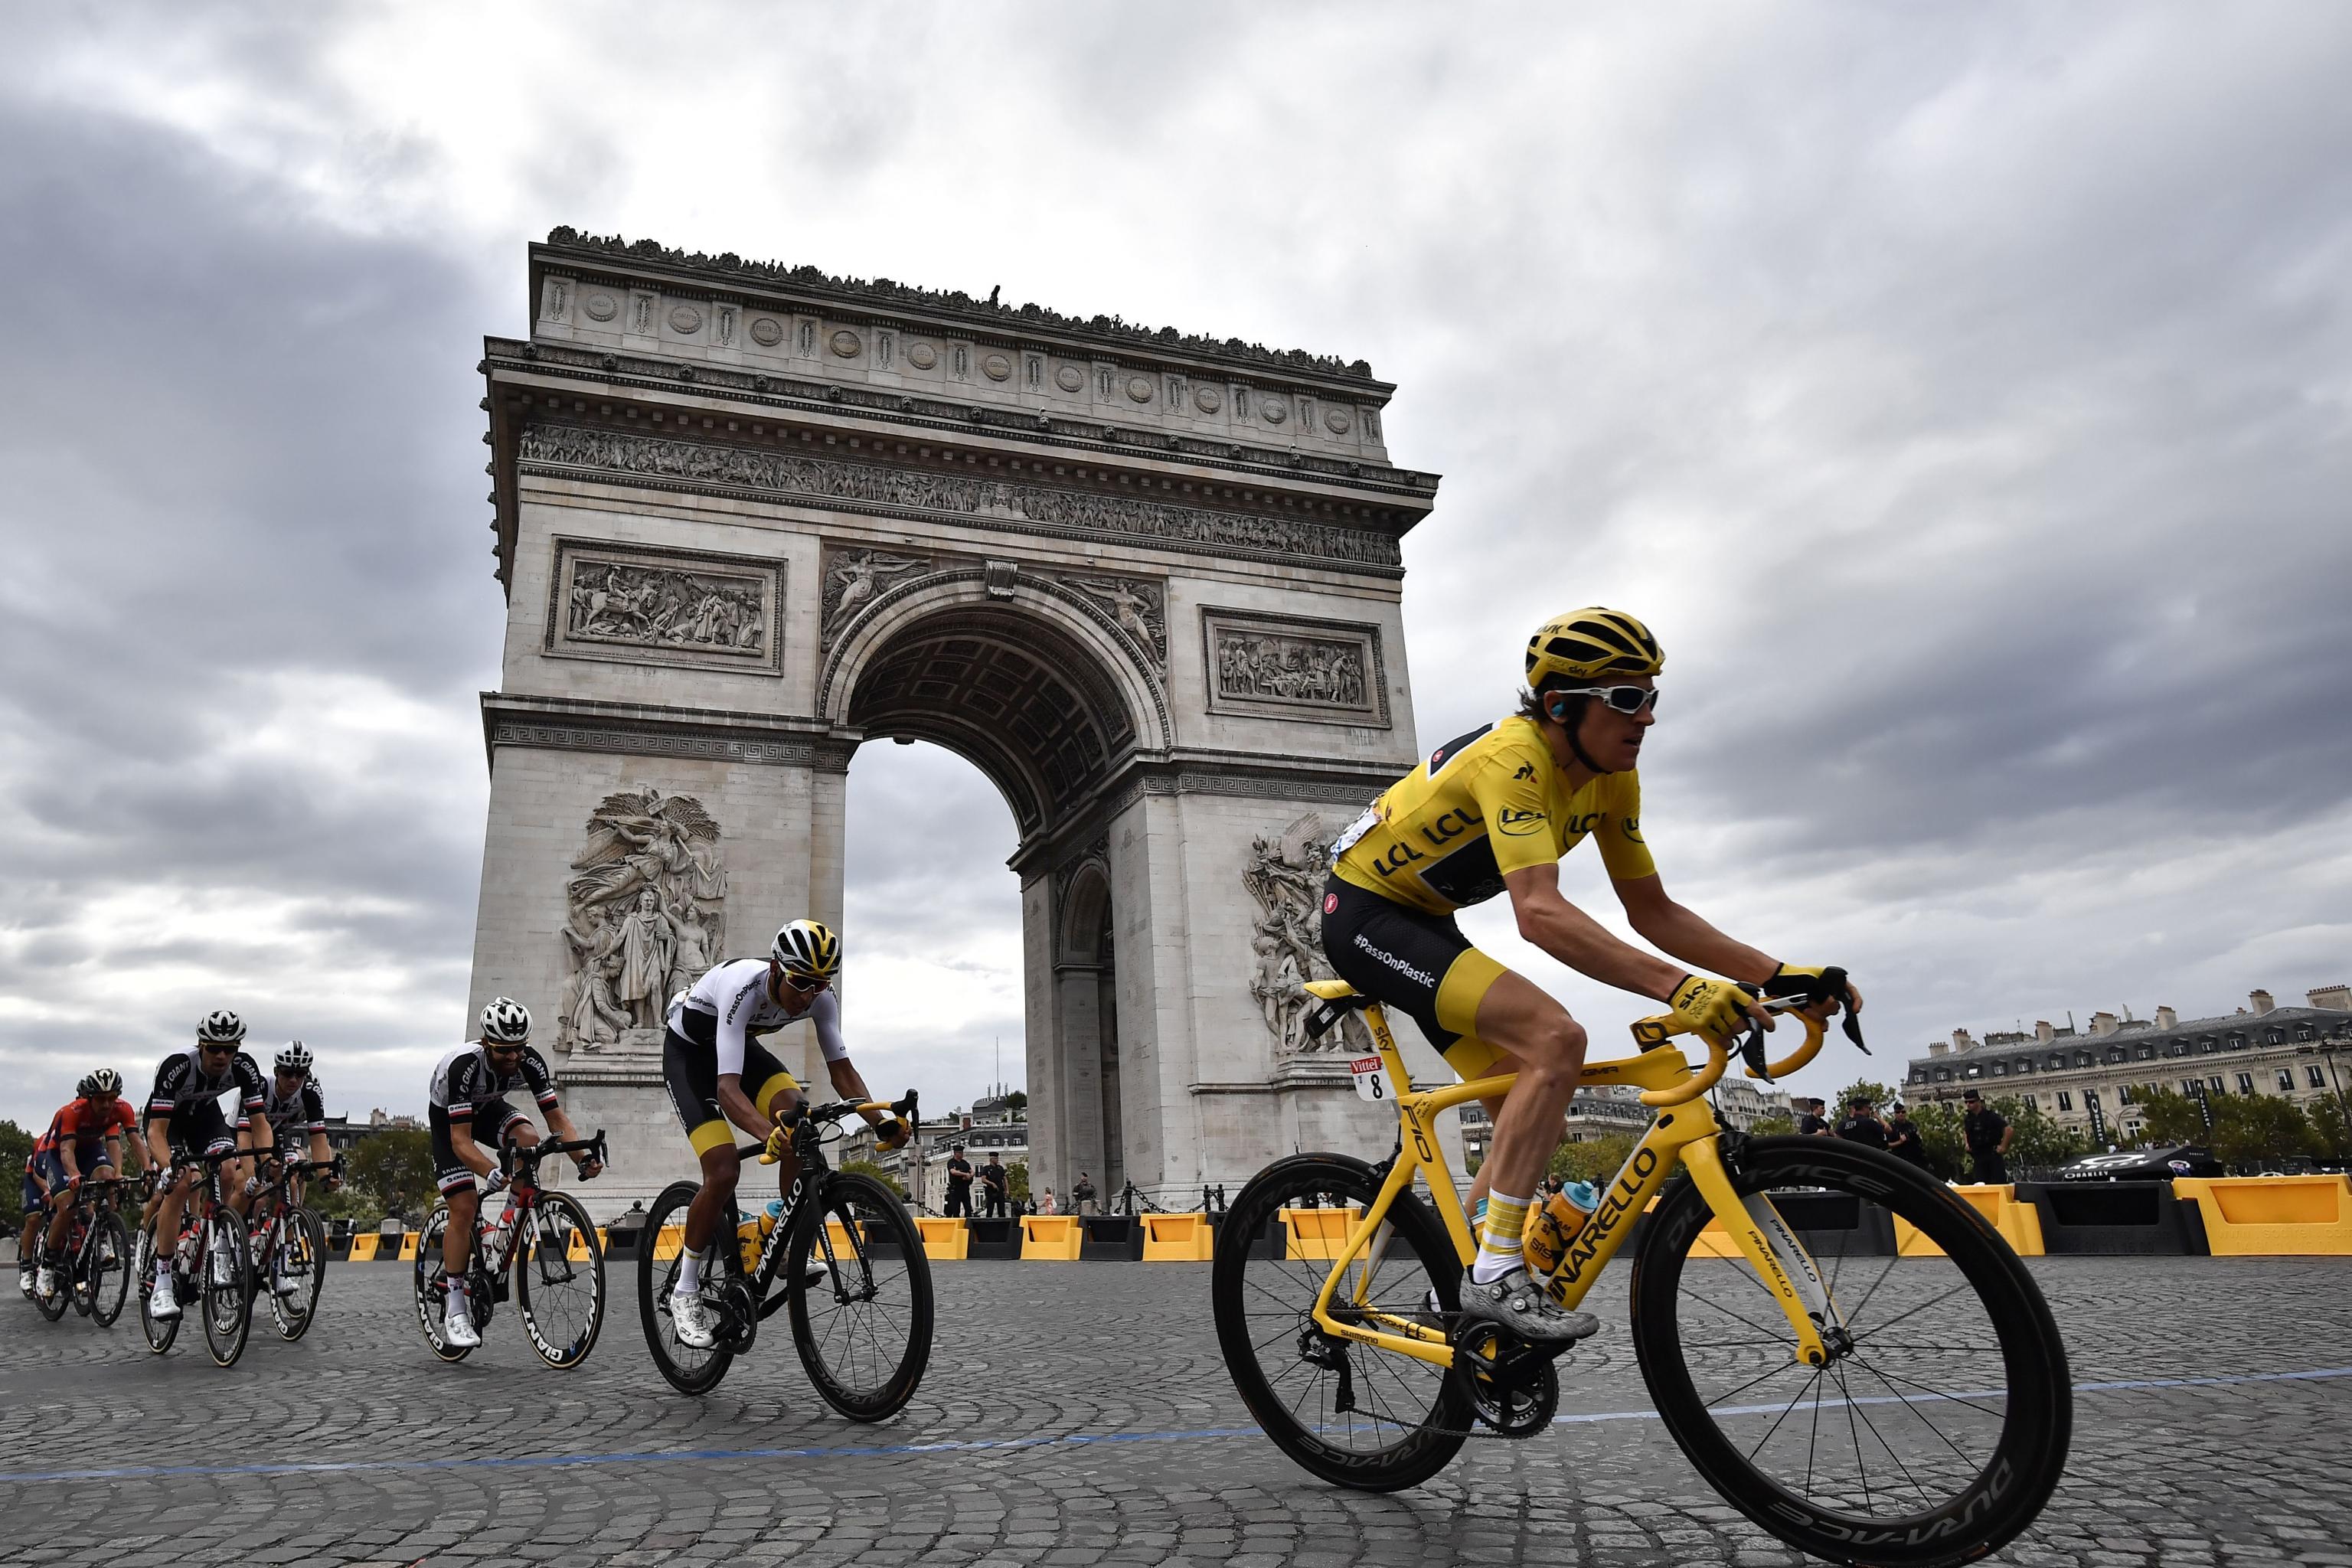 Tour de France 2018 results: Geraint Thomas wins yellow jersey